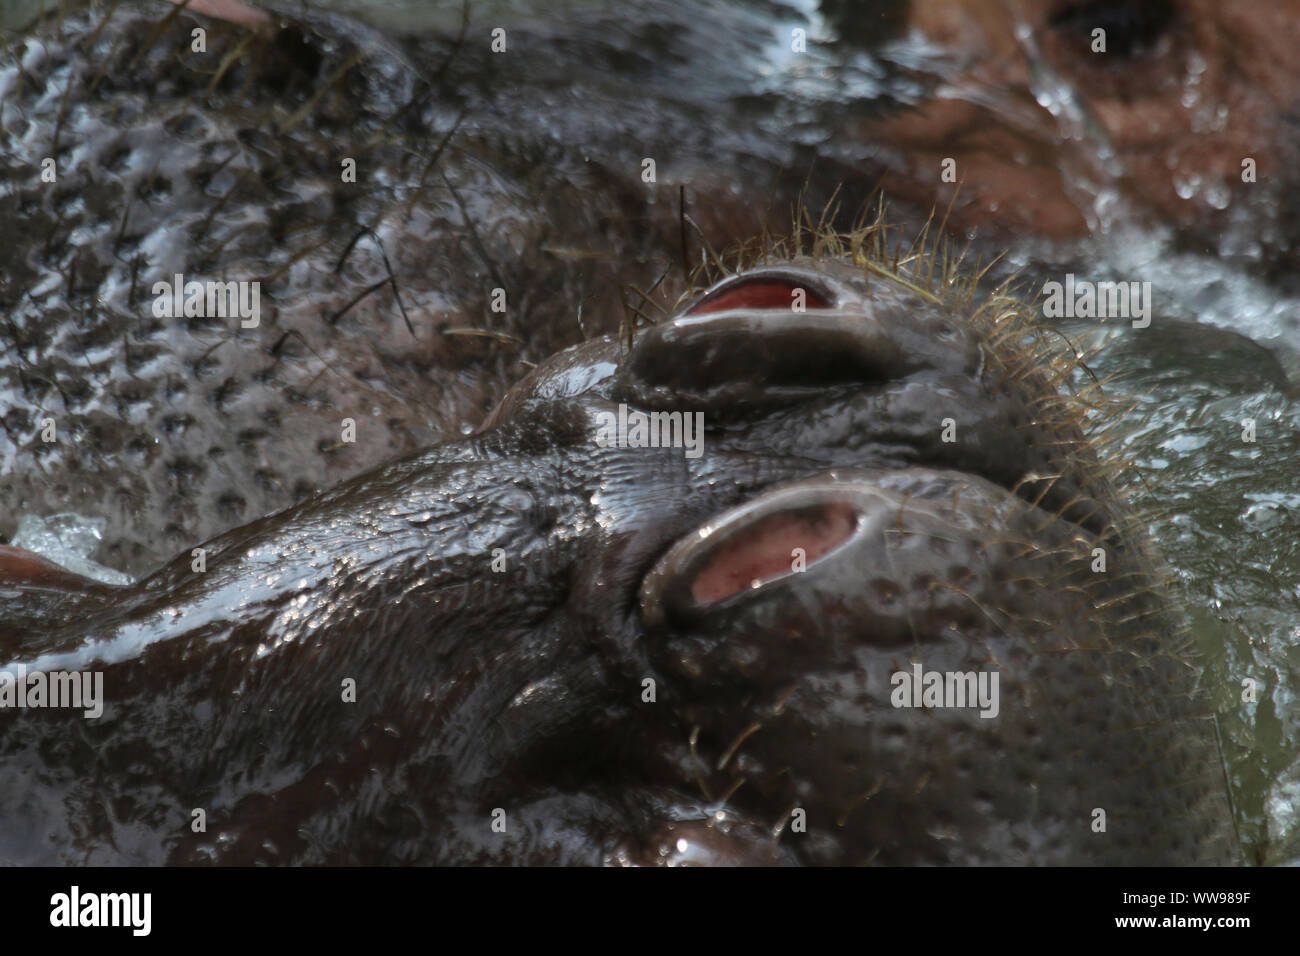 Wild hippopotamus mammal with big fat head seen along rivers in safari Stock Photo